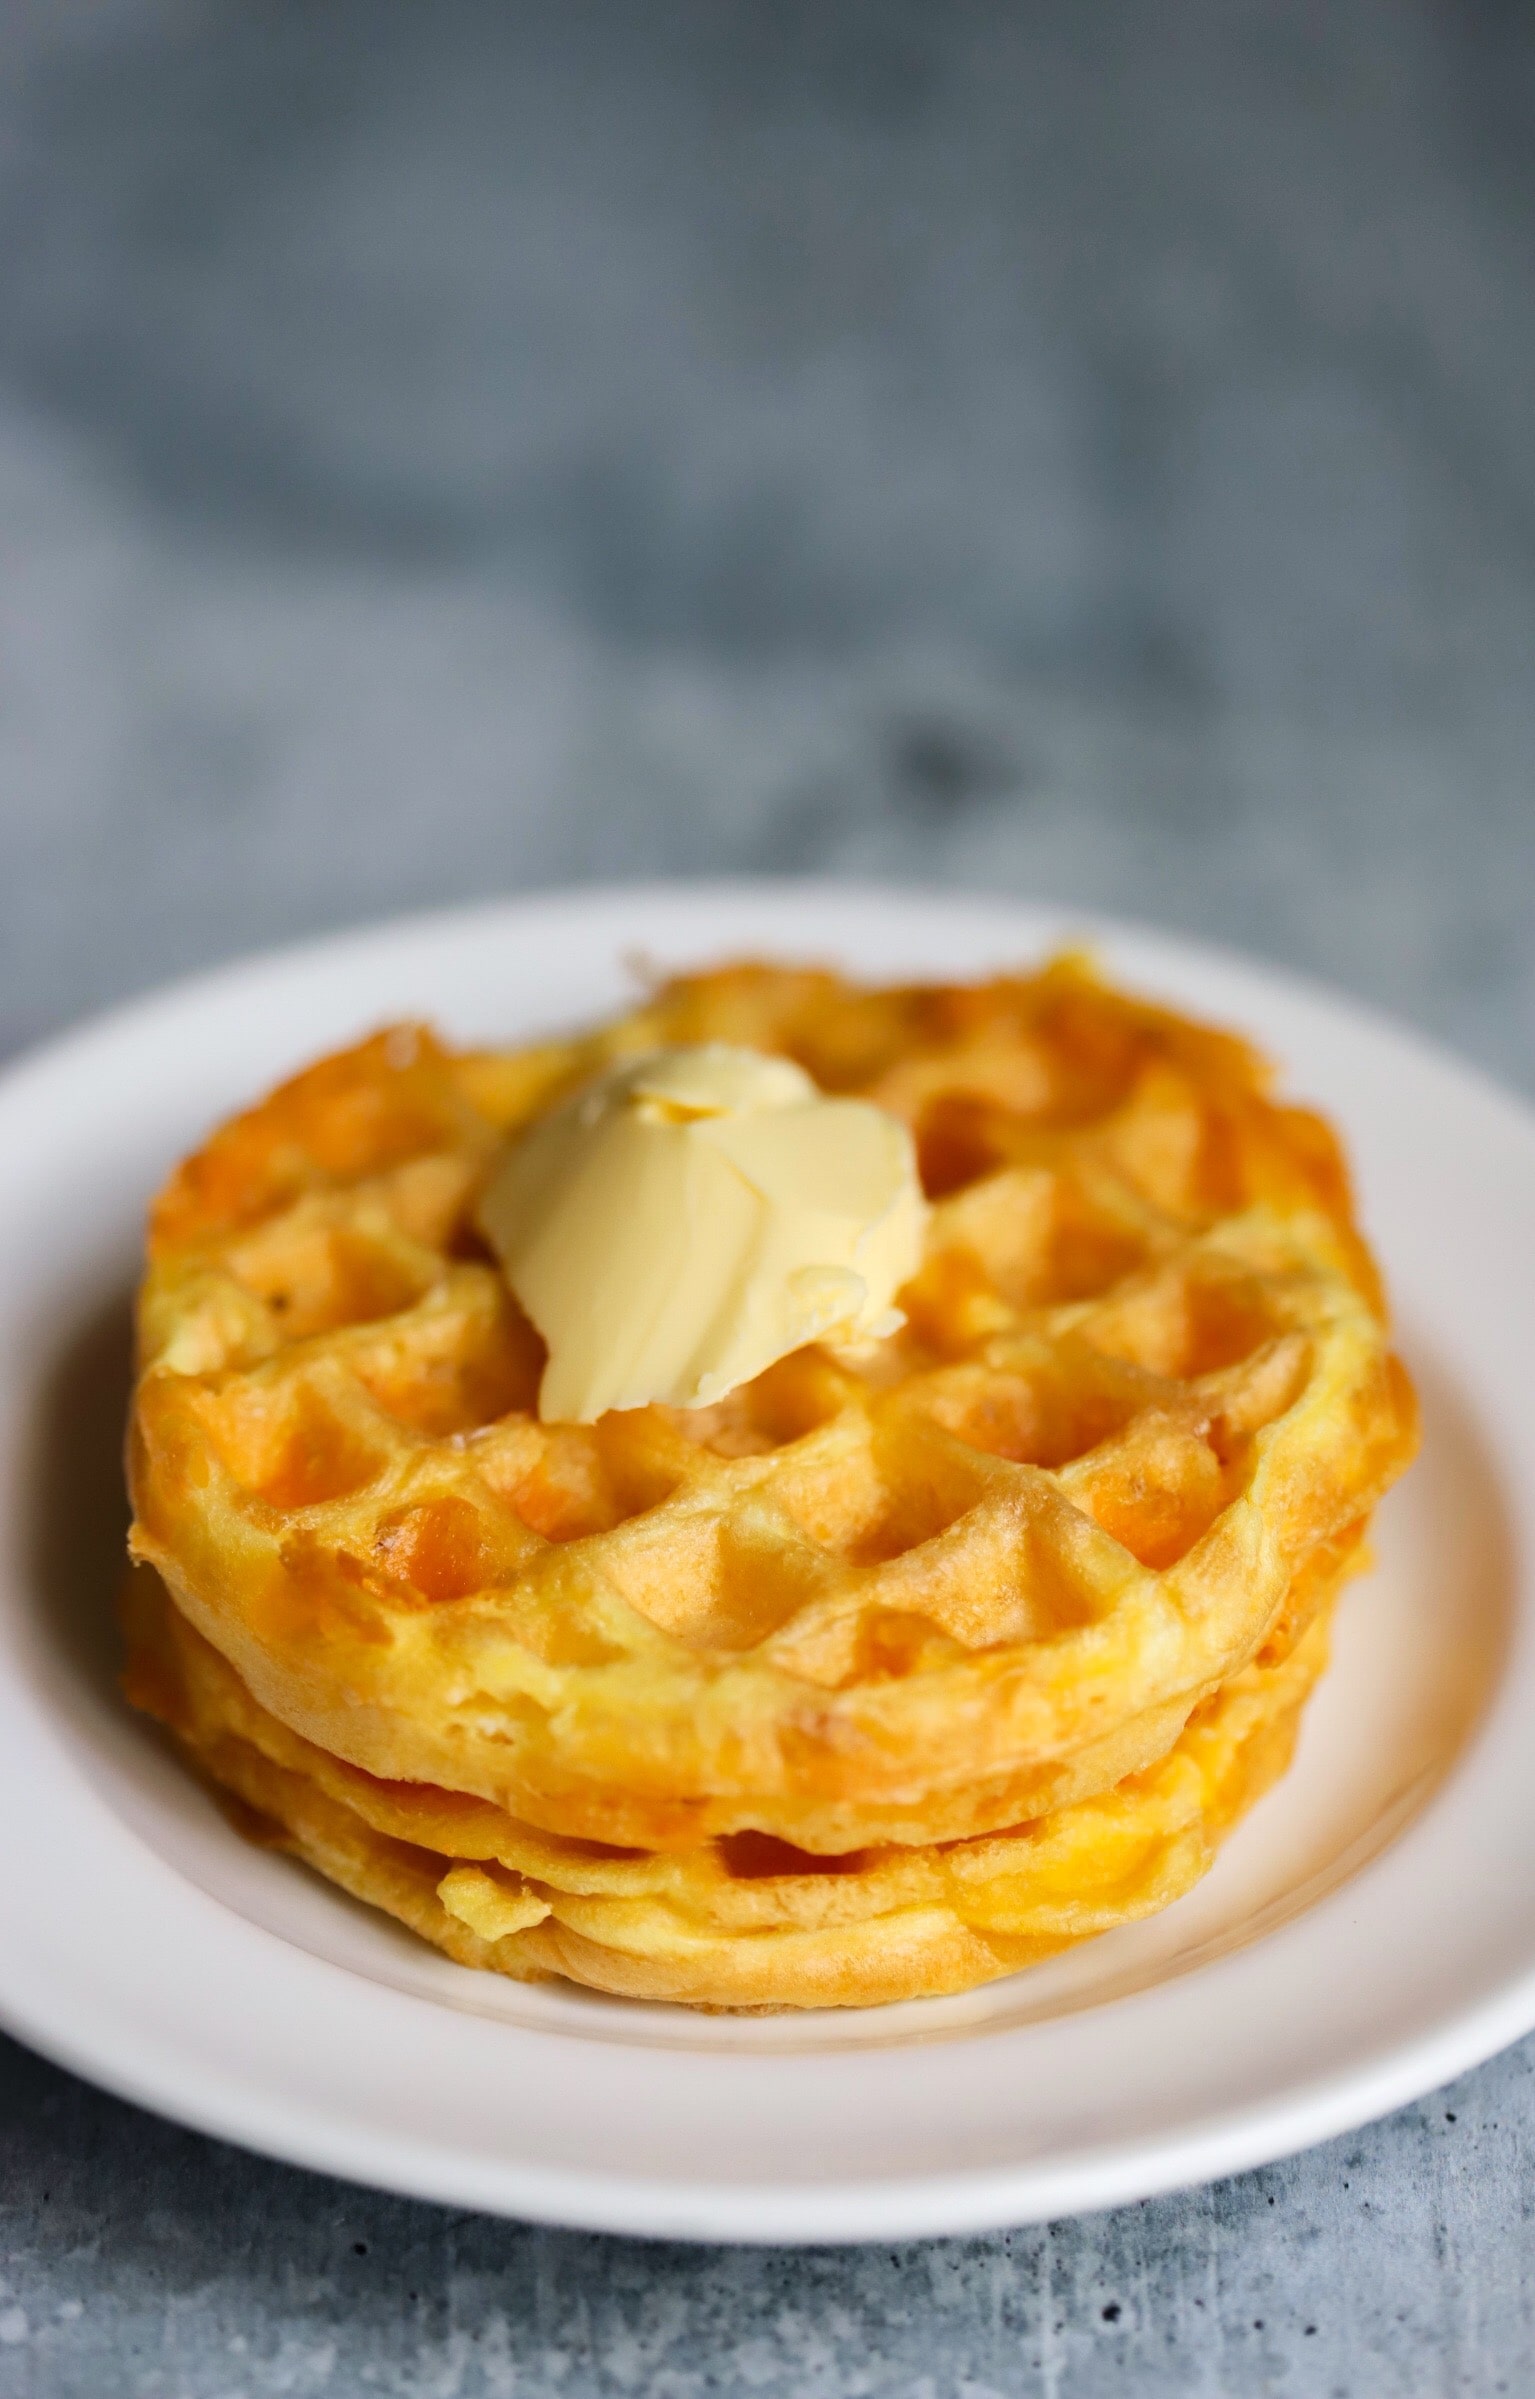 Mini Waffle Maker Recipes - Intentional Hospitality